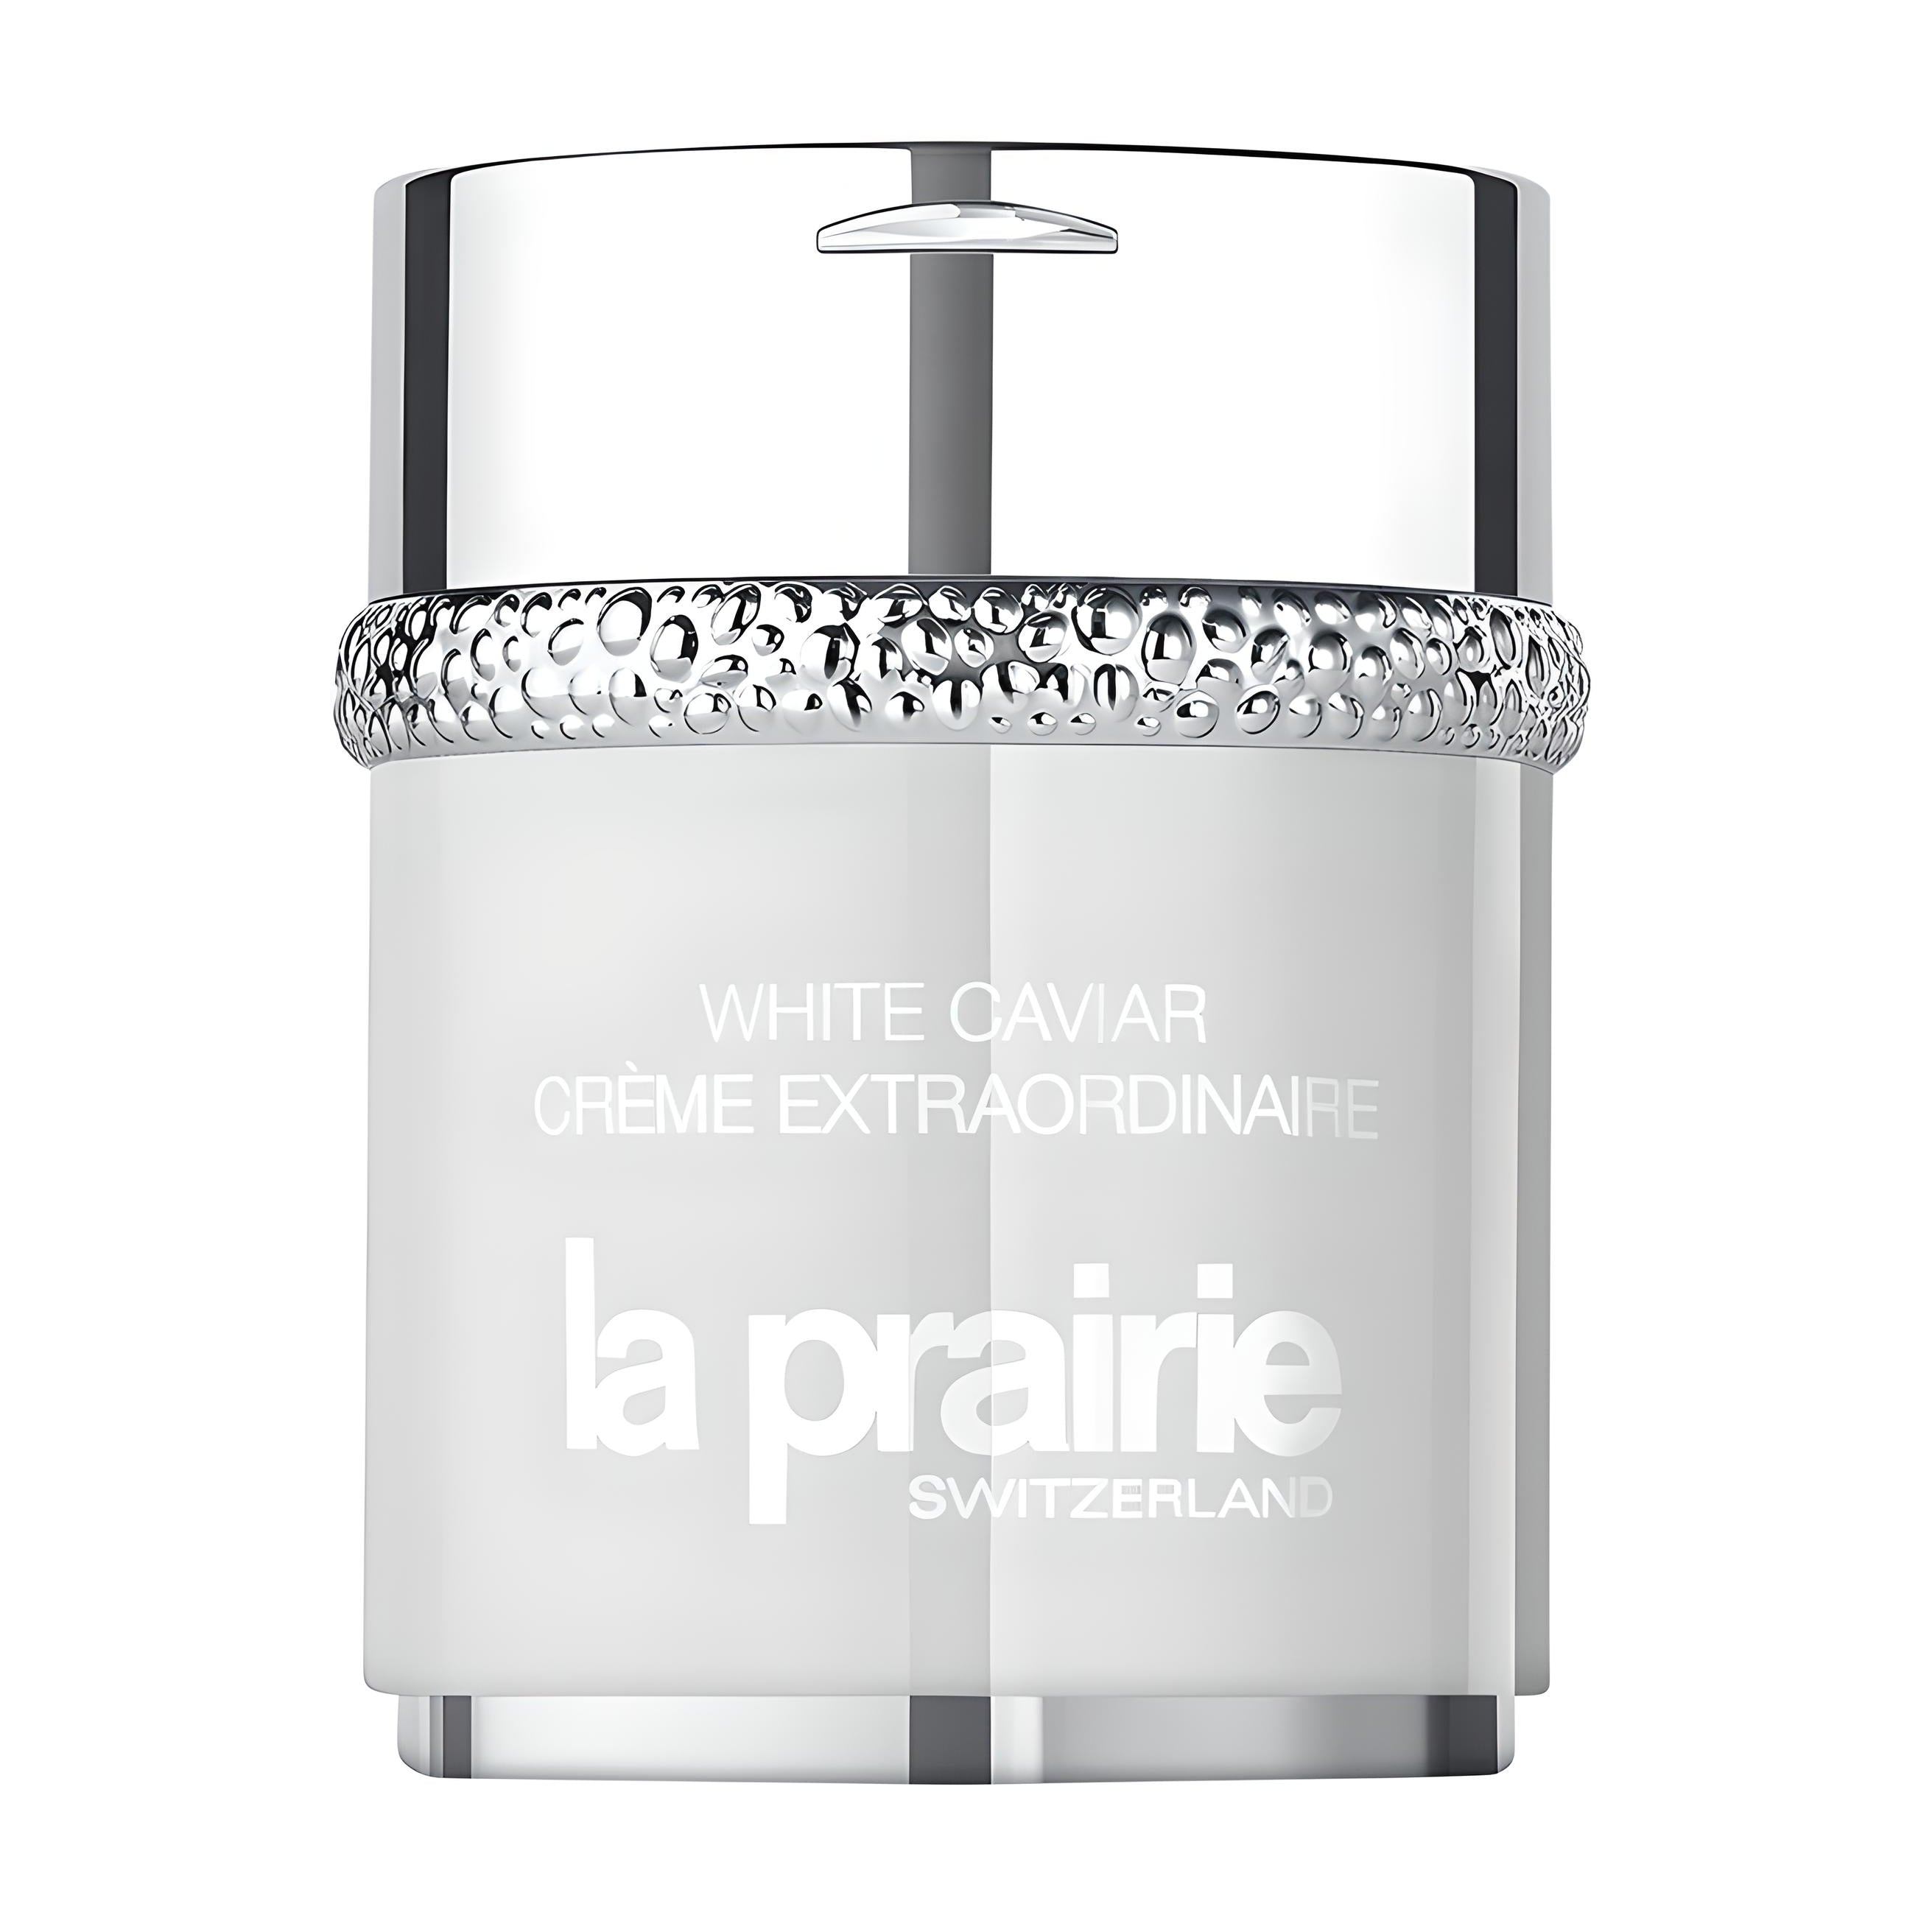 WHITE CAVIAR creme extraordinaire Gesichtspflege LA PRAIRIE   